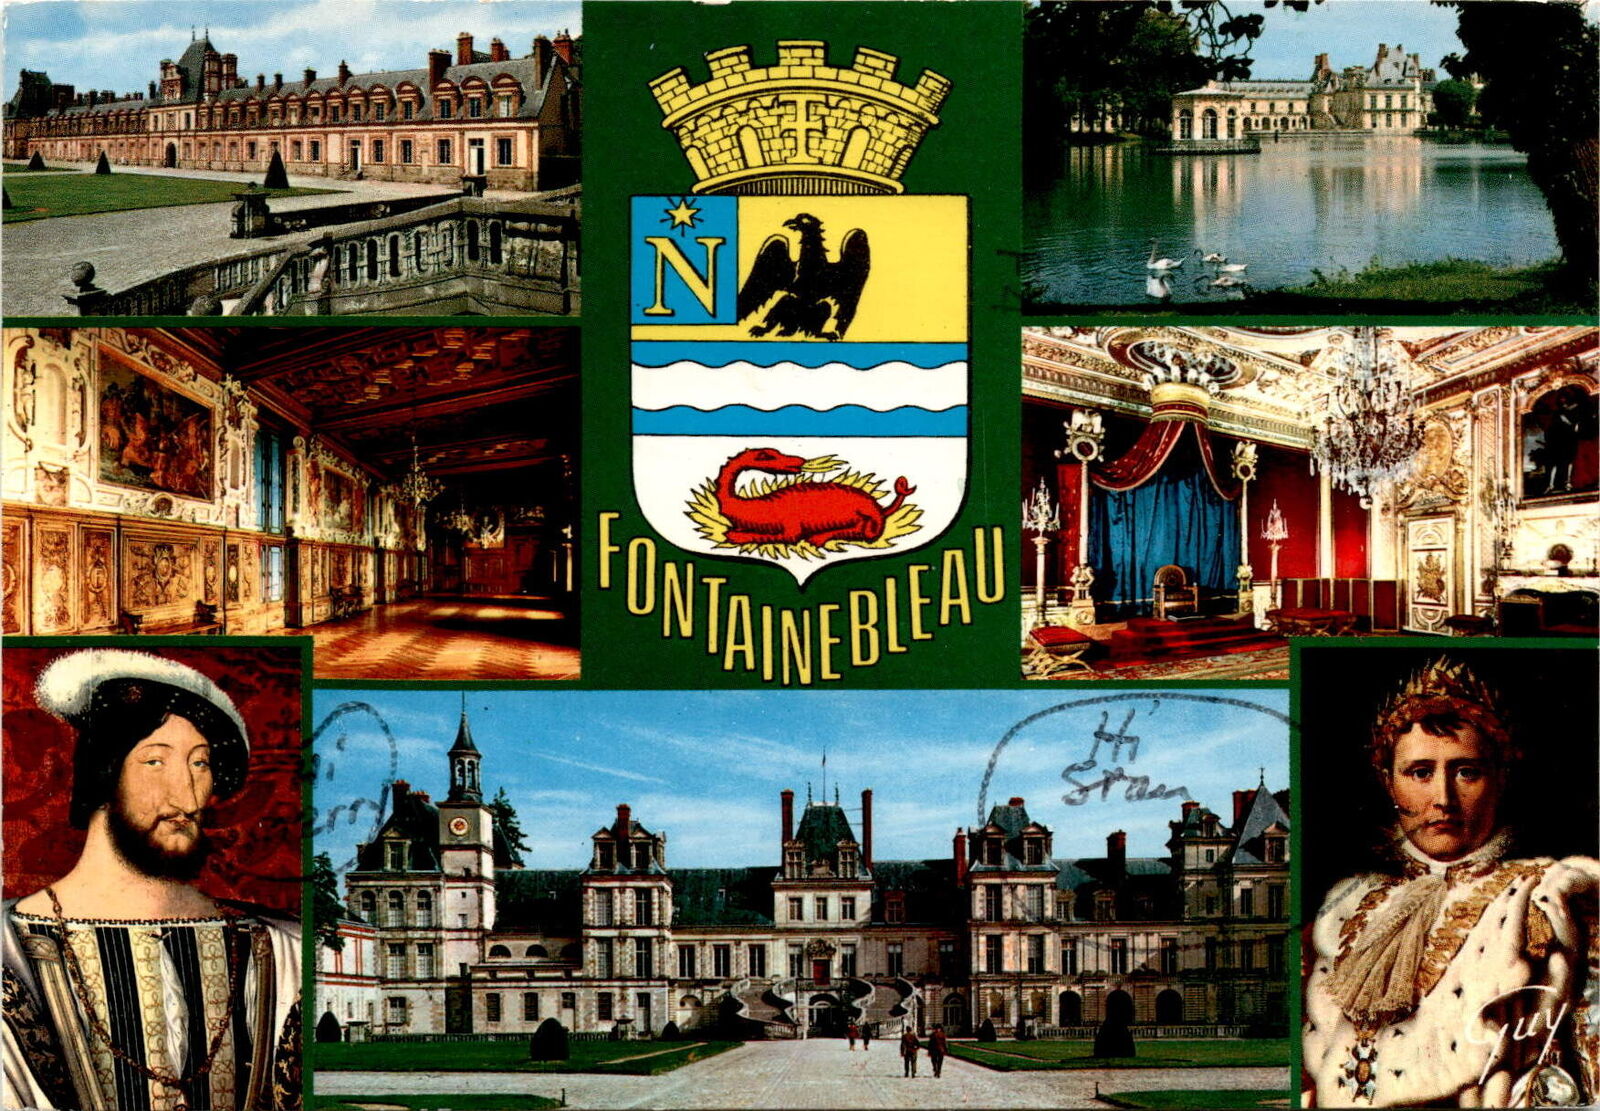 Fontainebleau, Seine-et-Marne, France Postcard